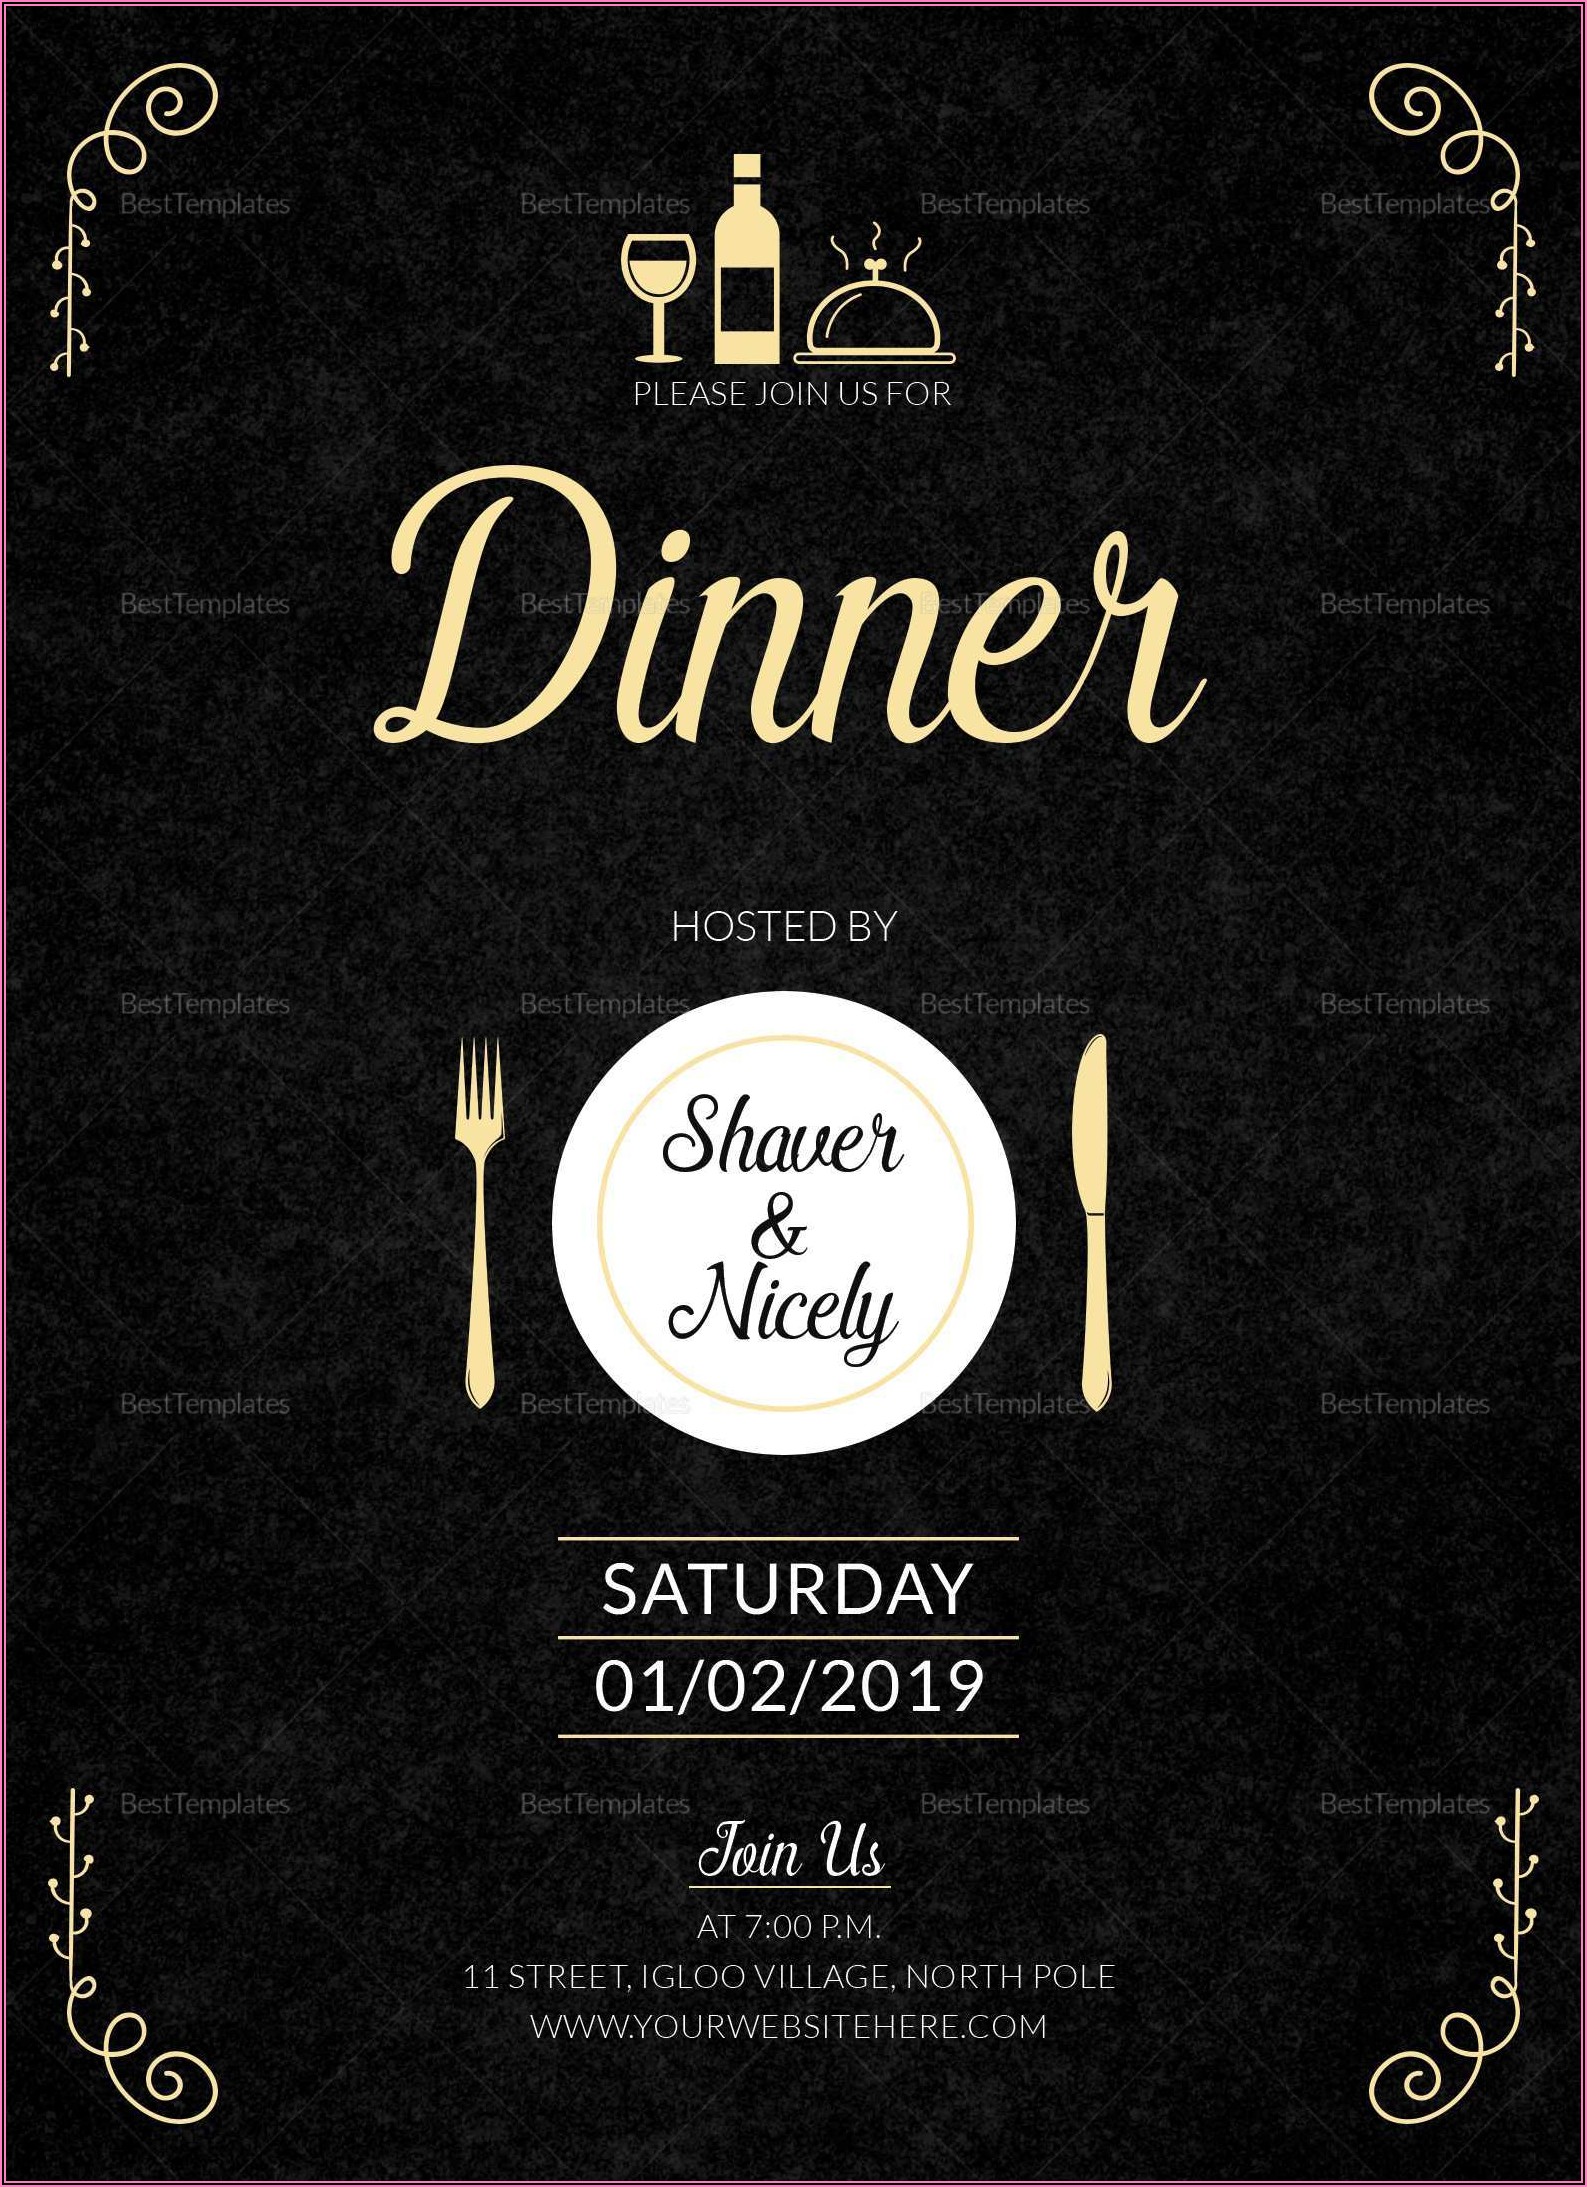 Dinner Invitation Card Template Free